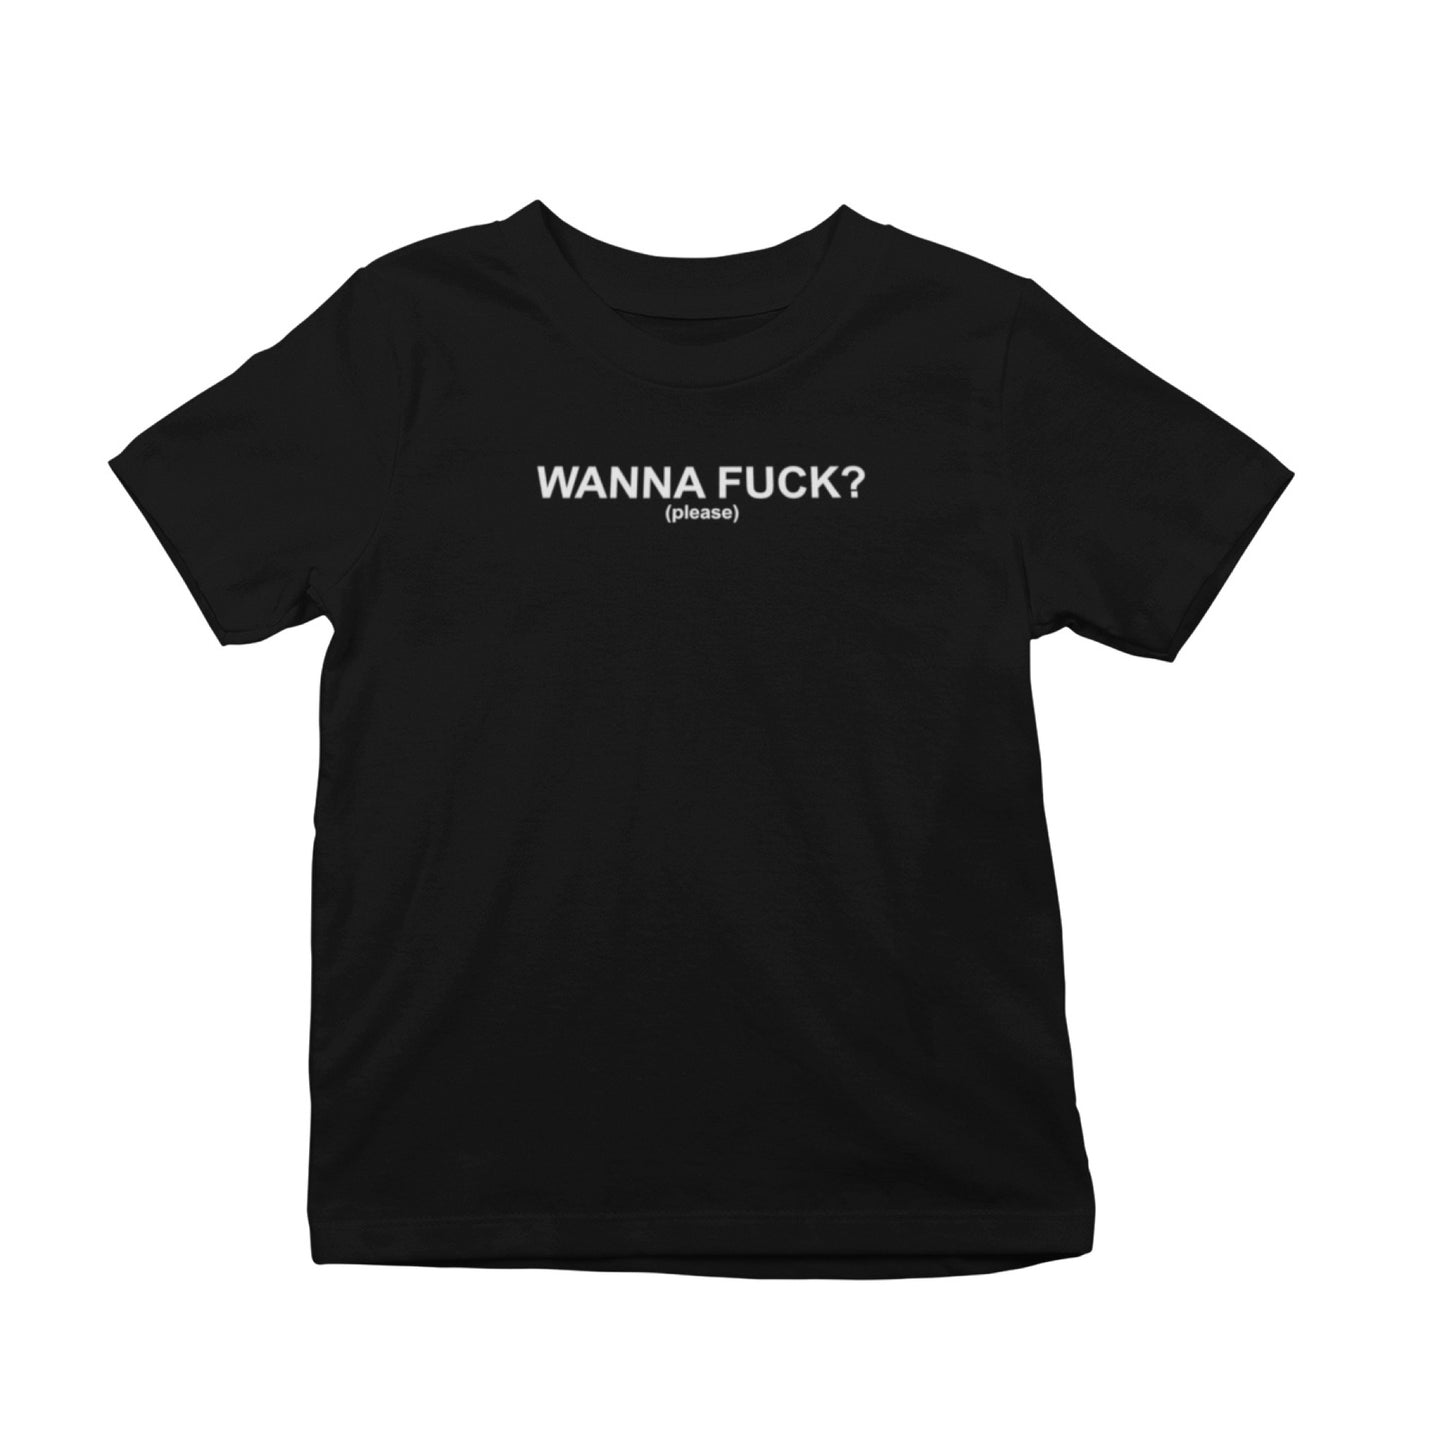 Wanna Fuck? (Please) T-Shirt